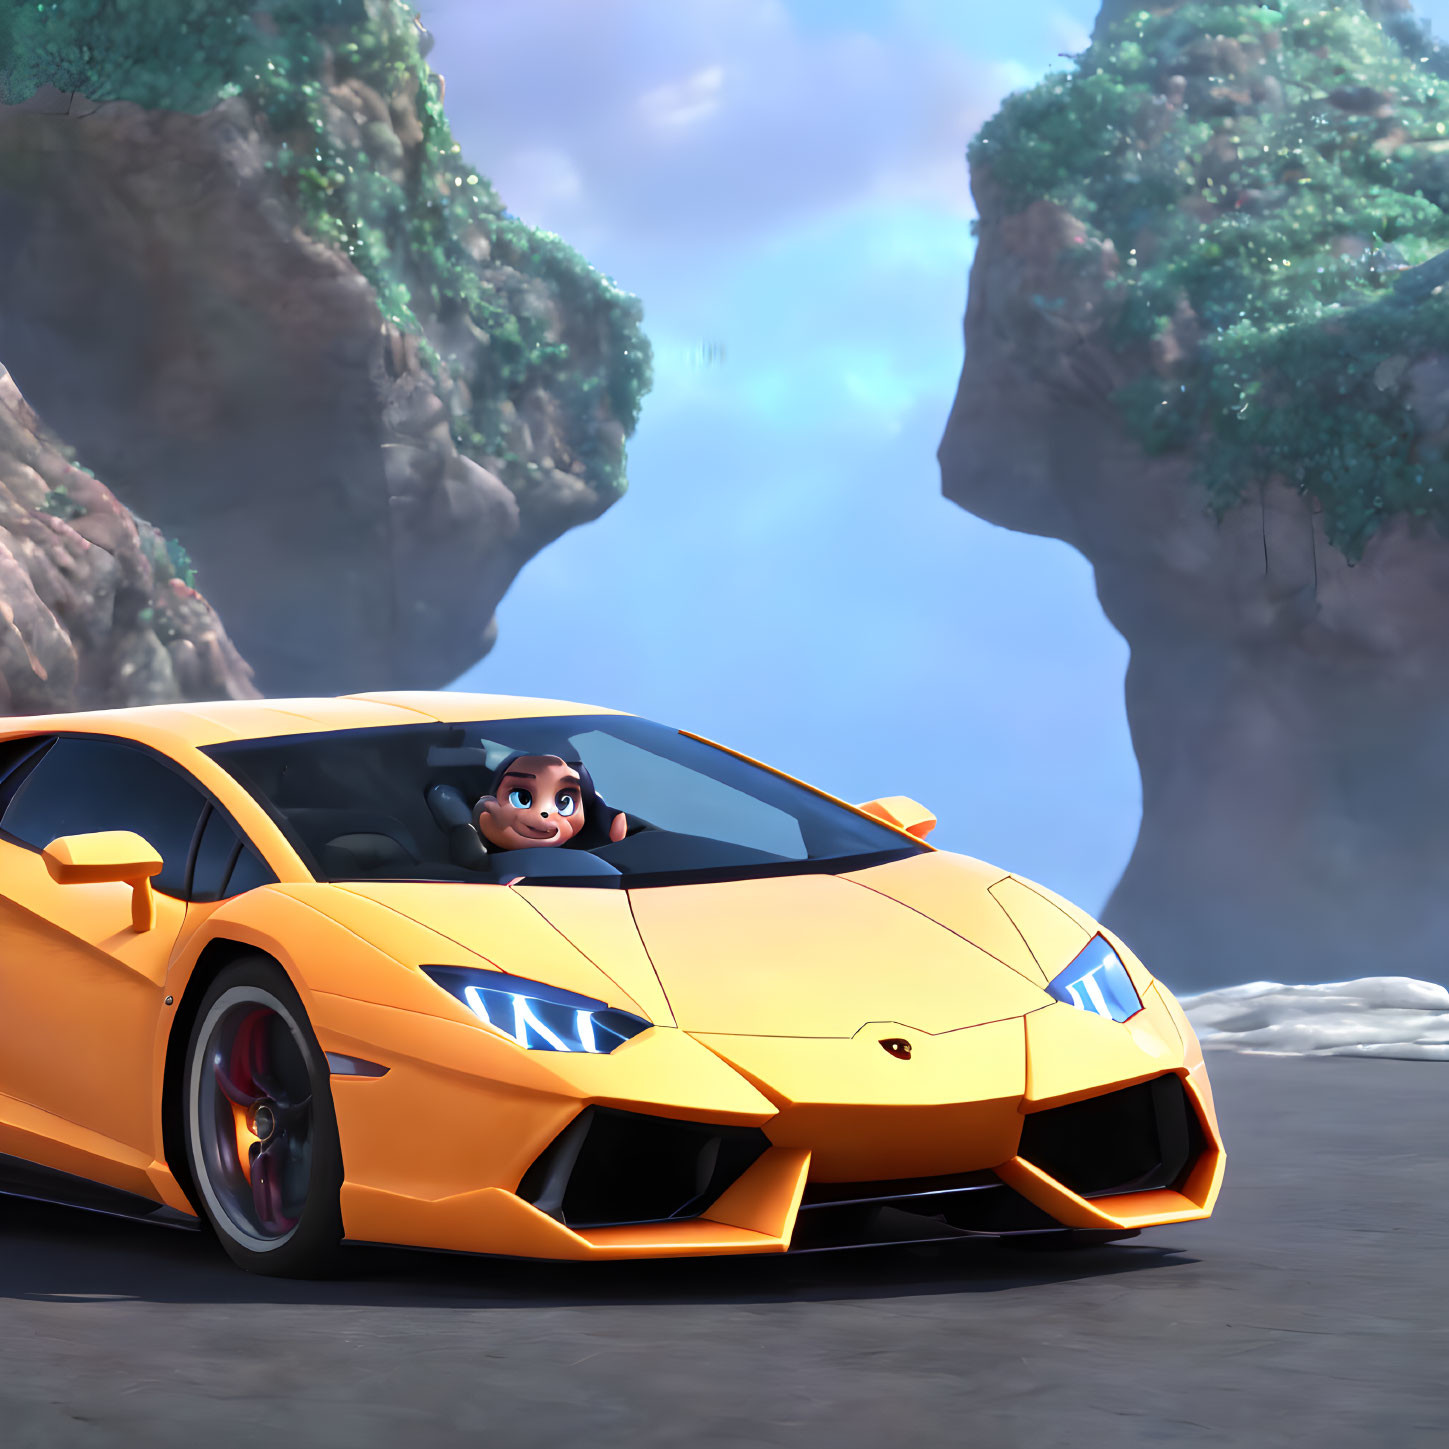 Dark-Haired Animated Character Driving Yellow Lamborghini on Coastal Road